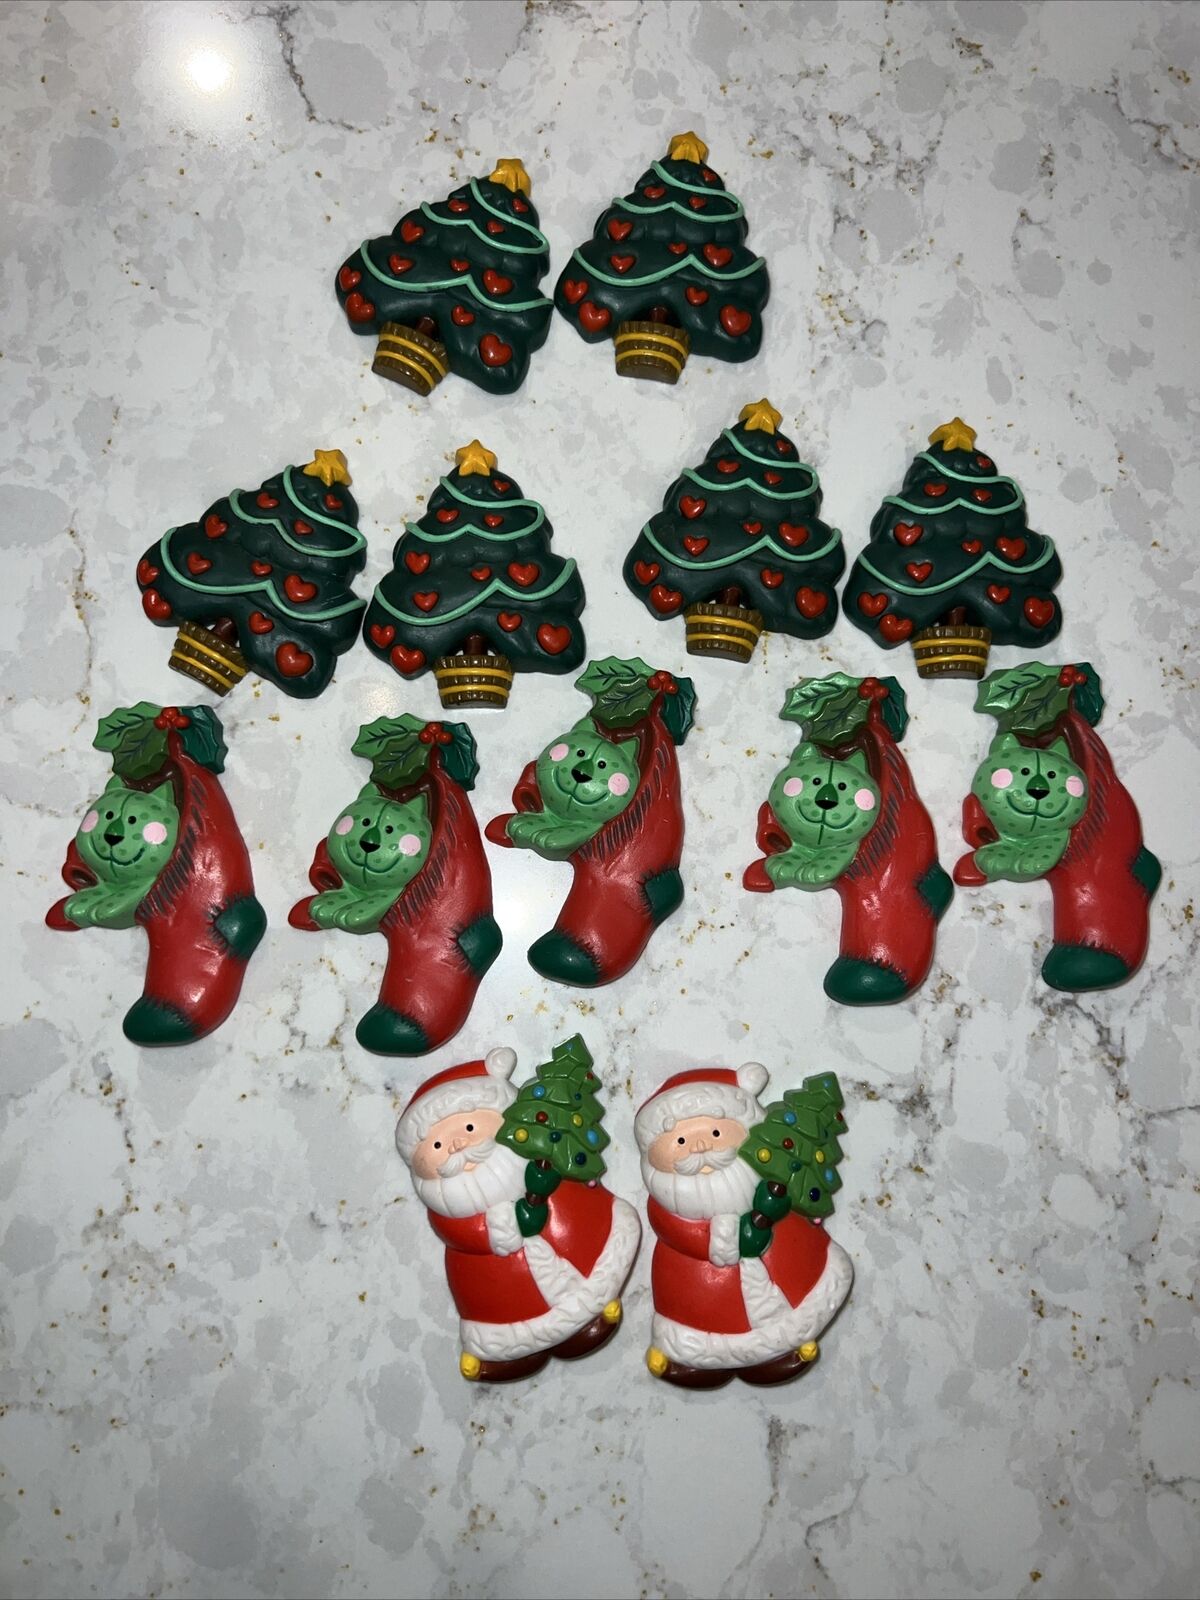 13 Vintage Refrigerator Magnets Christmas Tree Stockings Cats Santa Claus